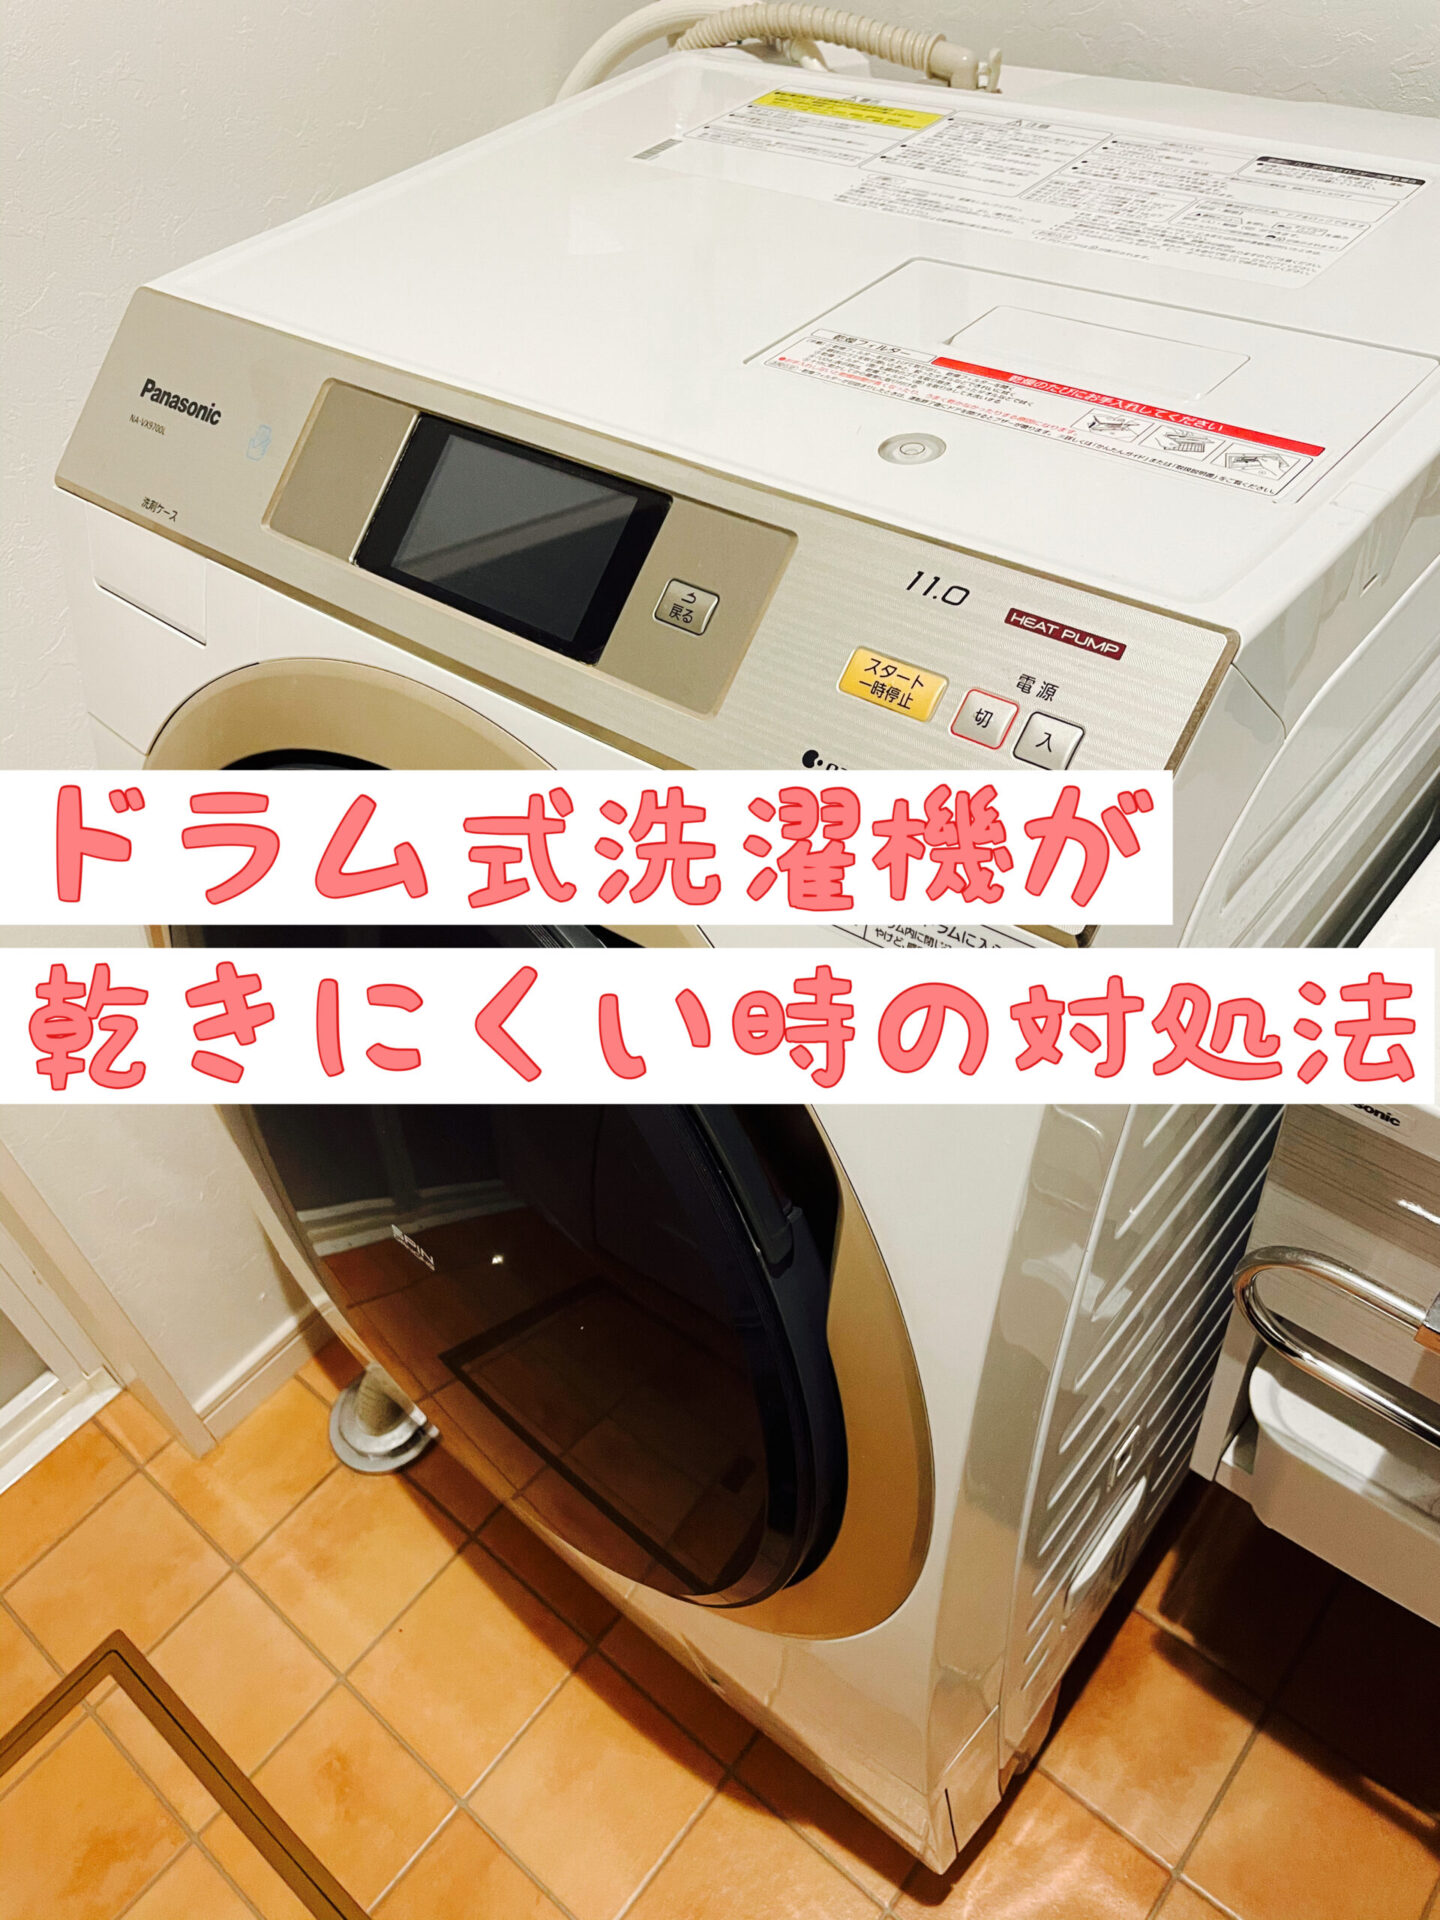 Panasonic NA-VX7700 ドラム式洗濯機 ヒートポンプ式 分解洗浄 | tspea.org